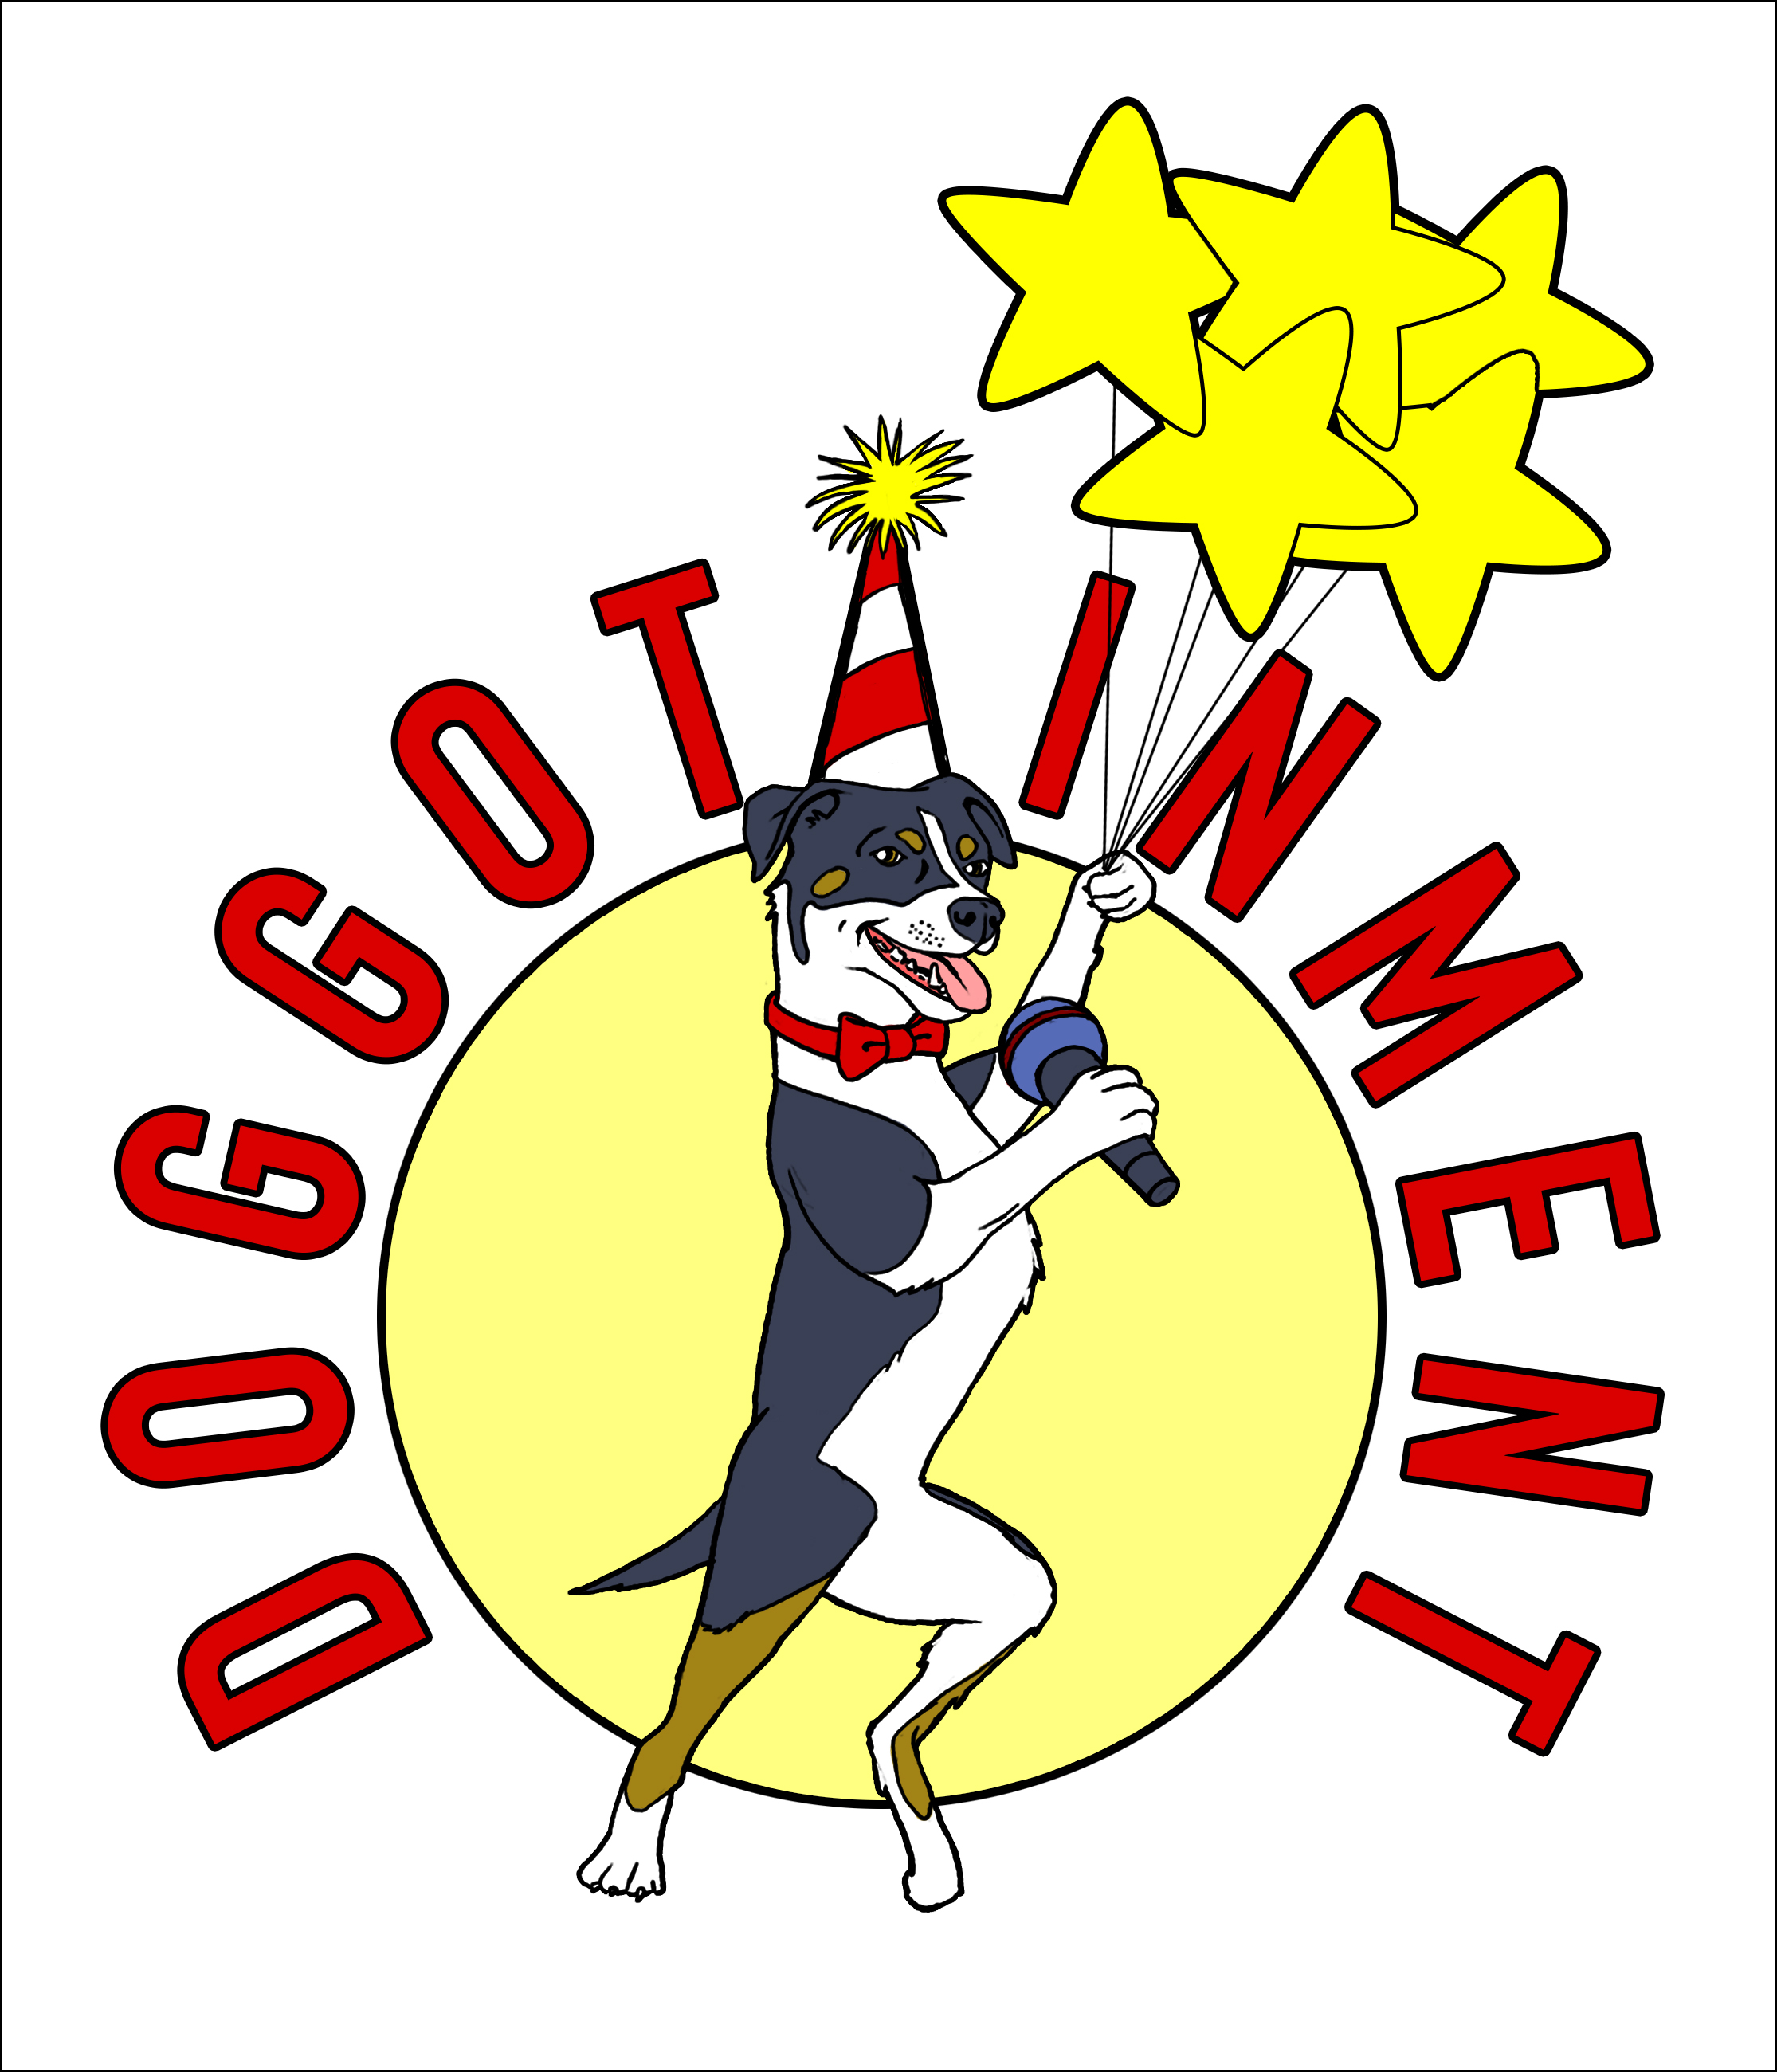  Doggotainment logo